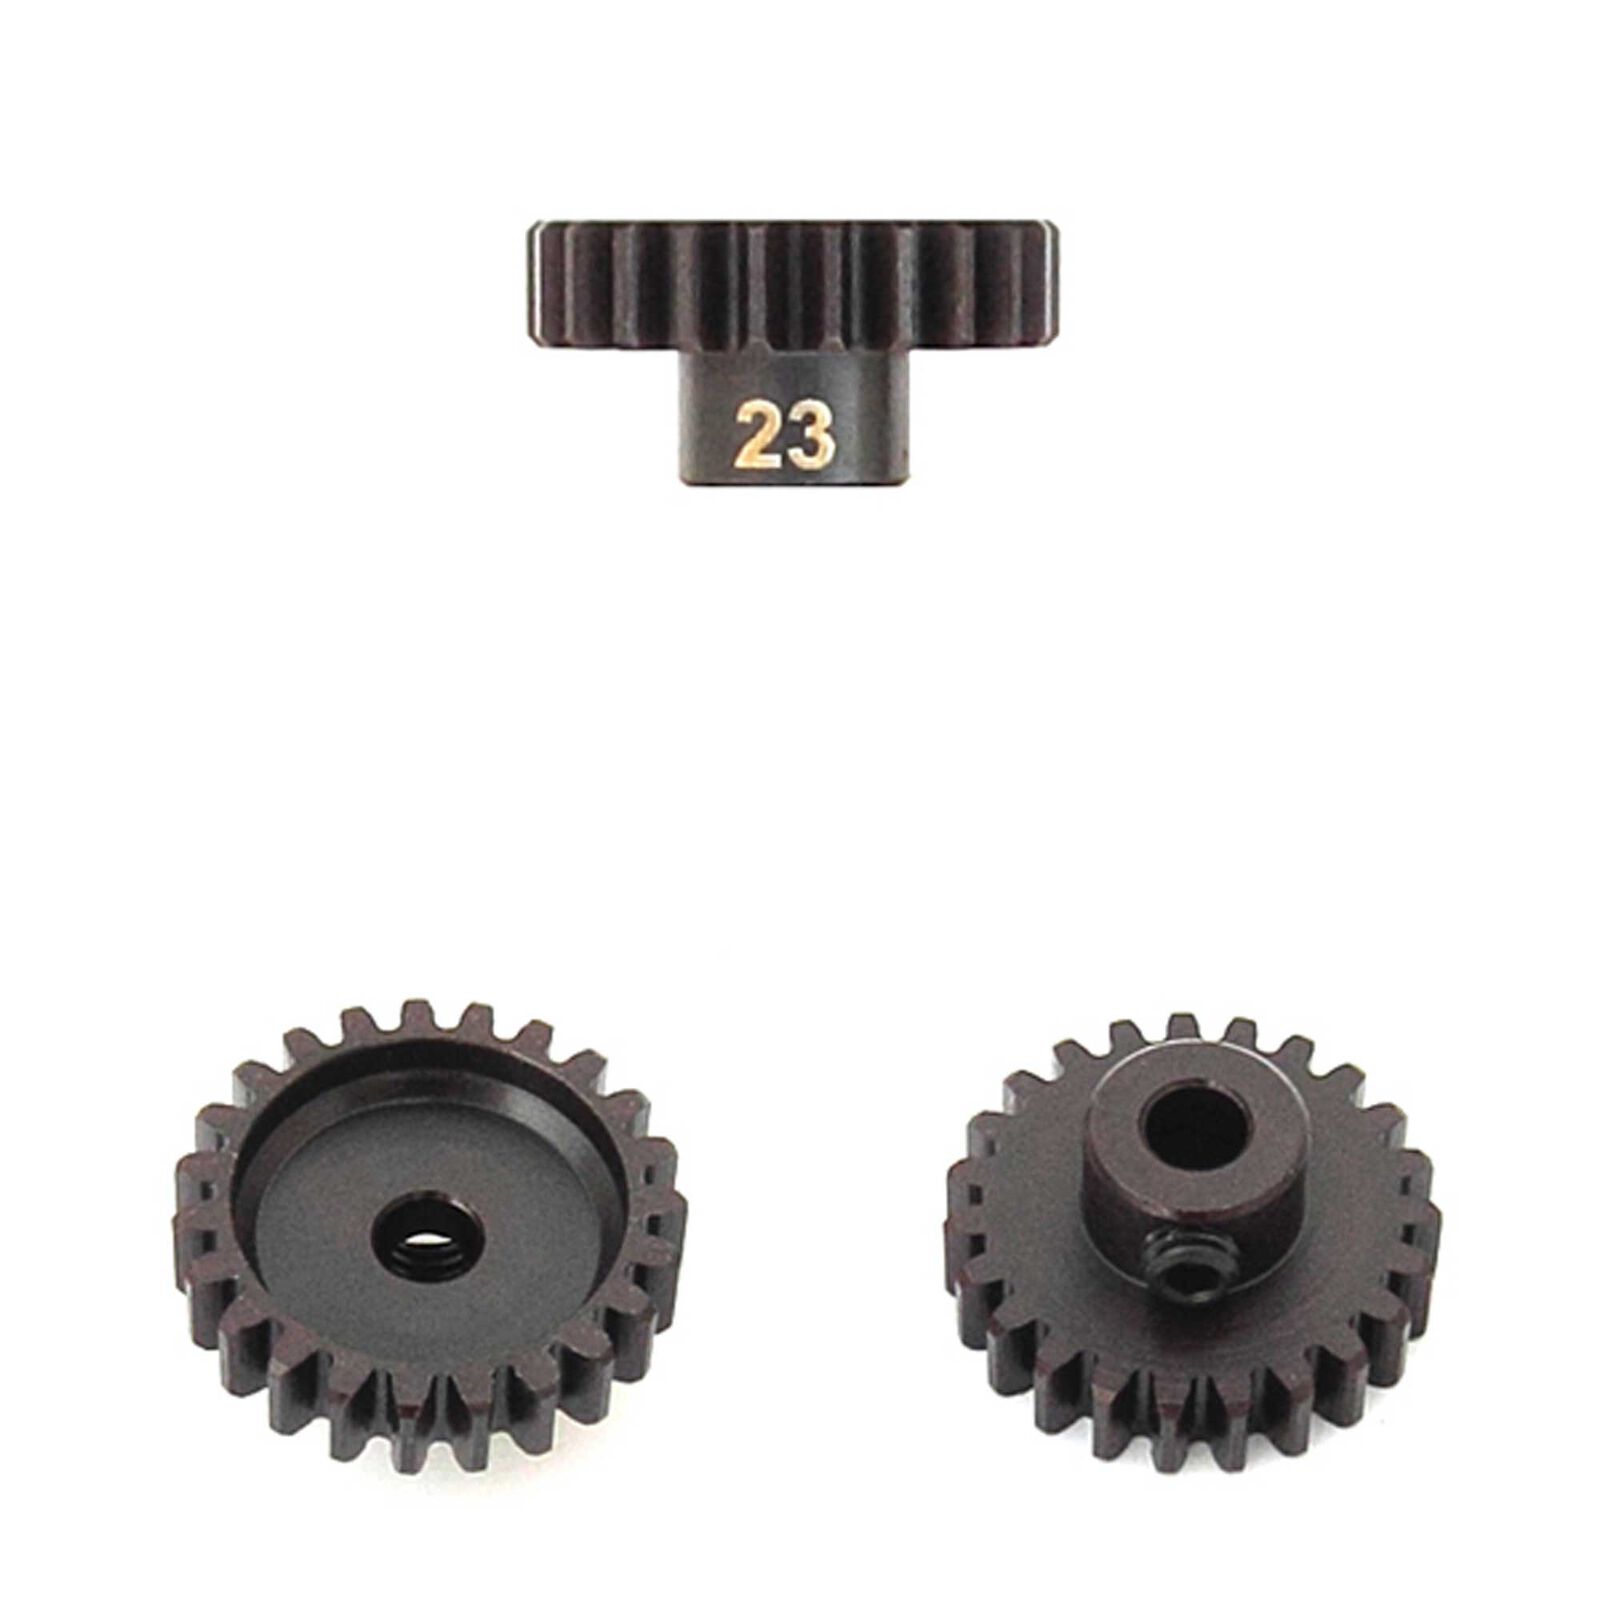 M5 Pinion Gear, 23T, MOD1, 5mm Bore, M5 Set Screw